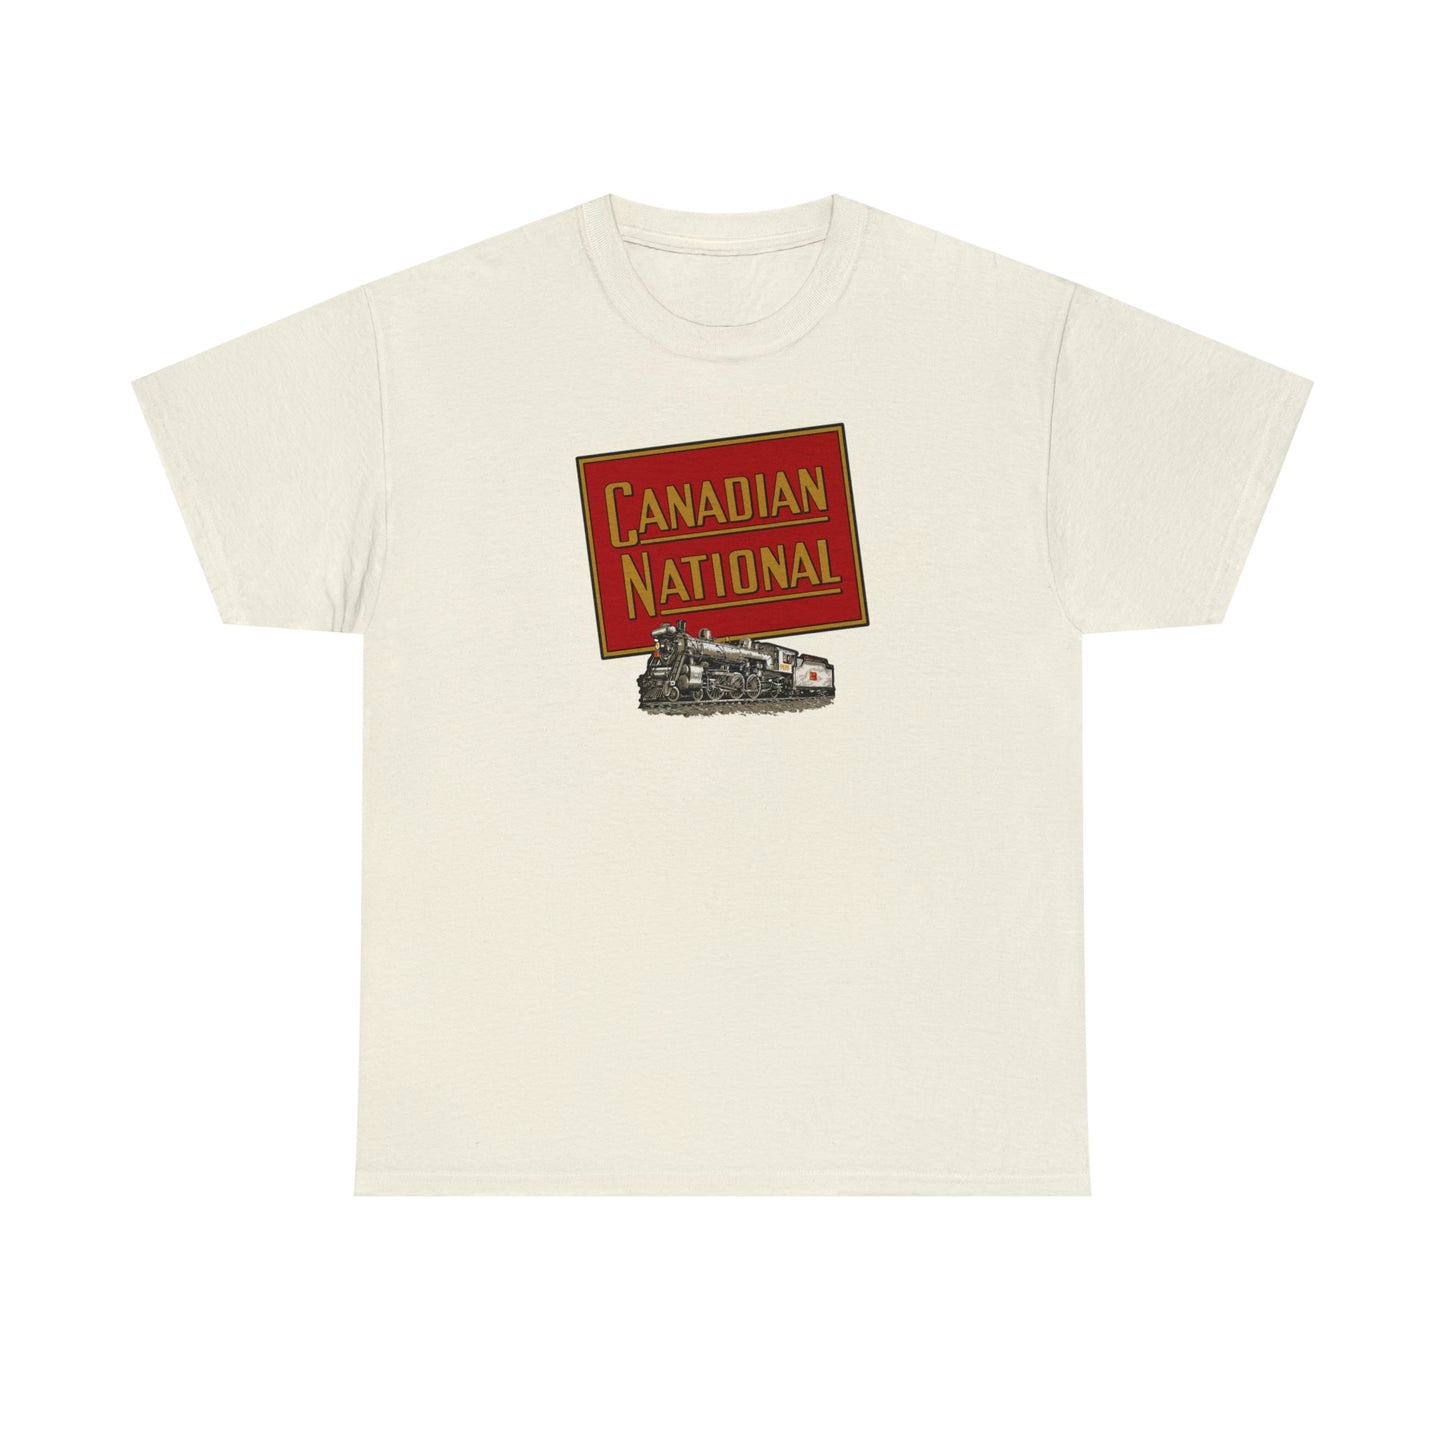 Canadian National Railroad T-Shirt